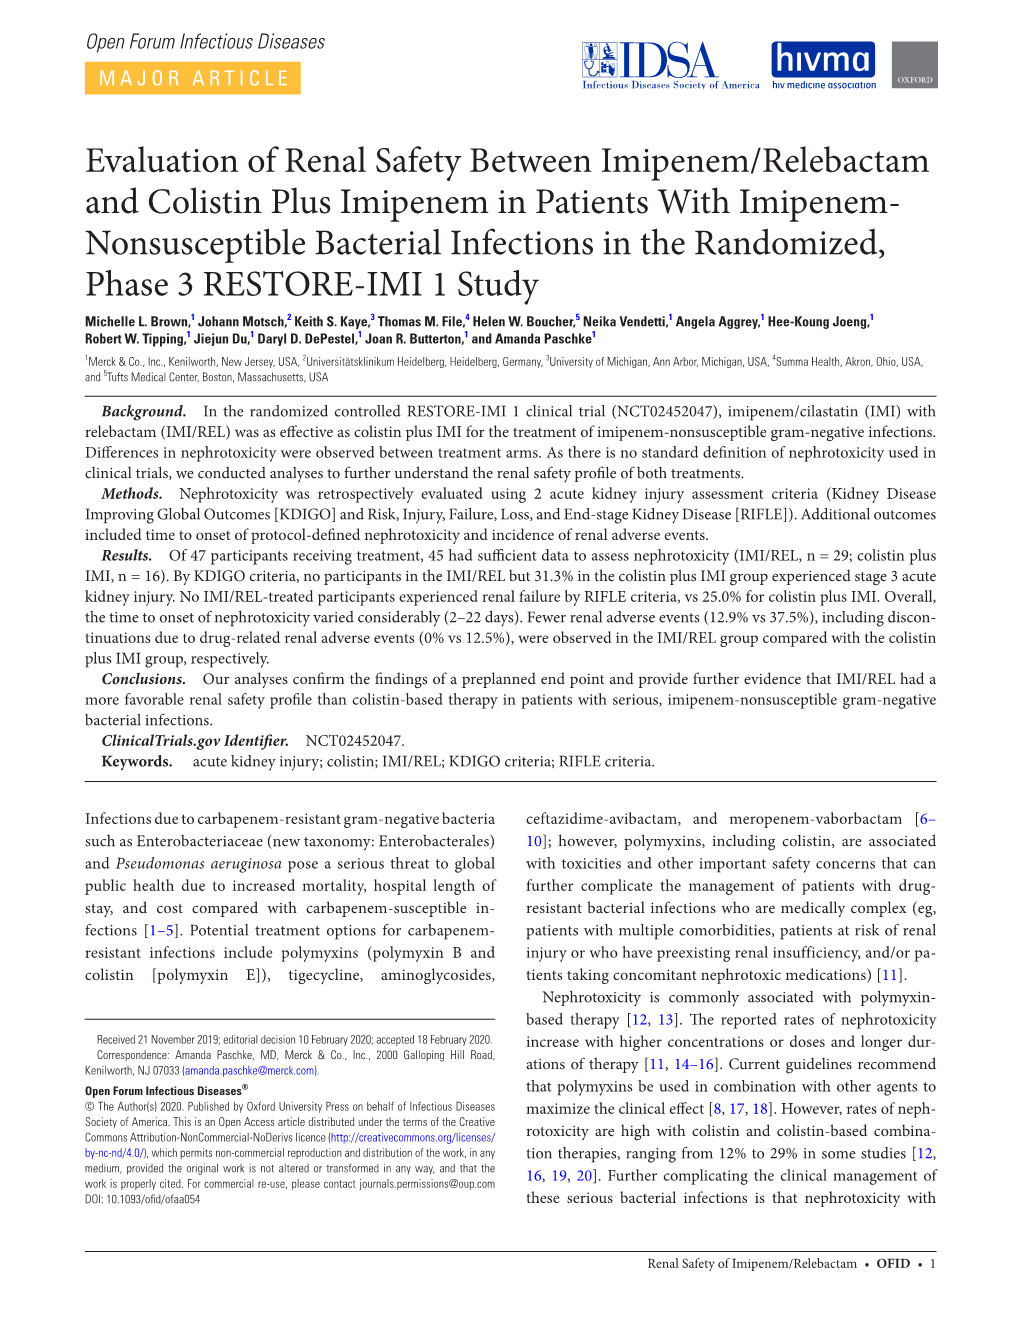 Evaluation of Renal Safety Between Imipenem/Relebactam and Colistin